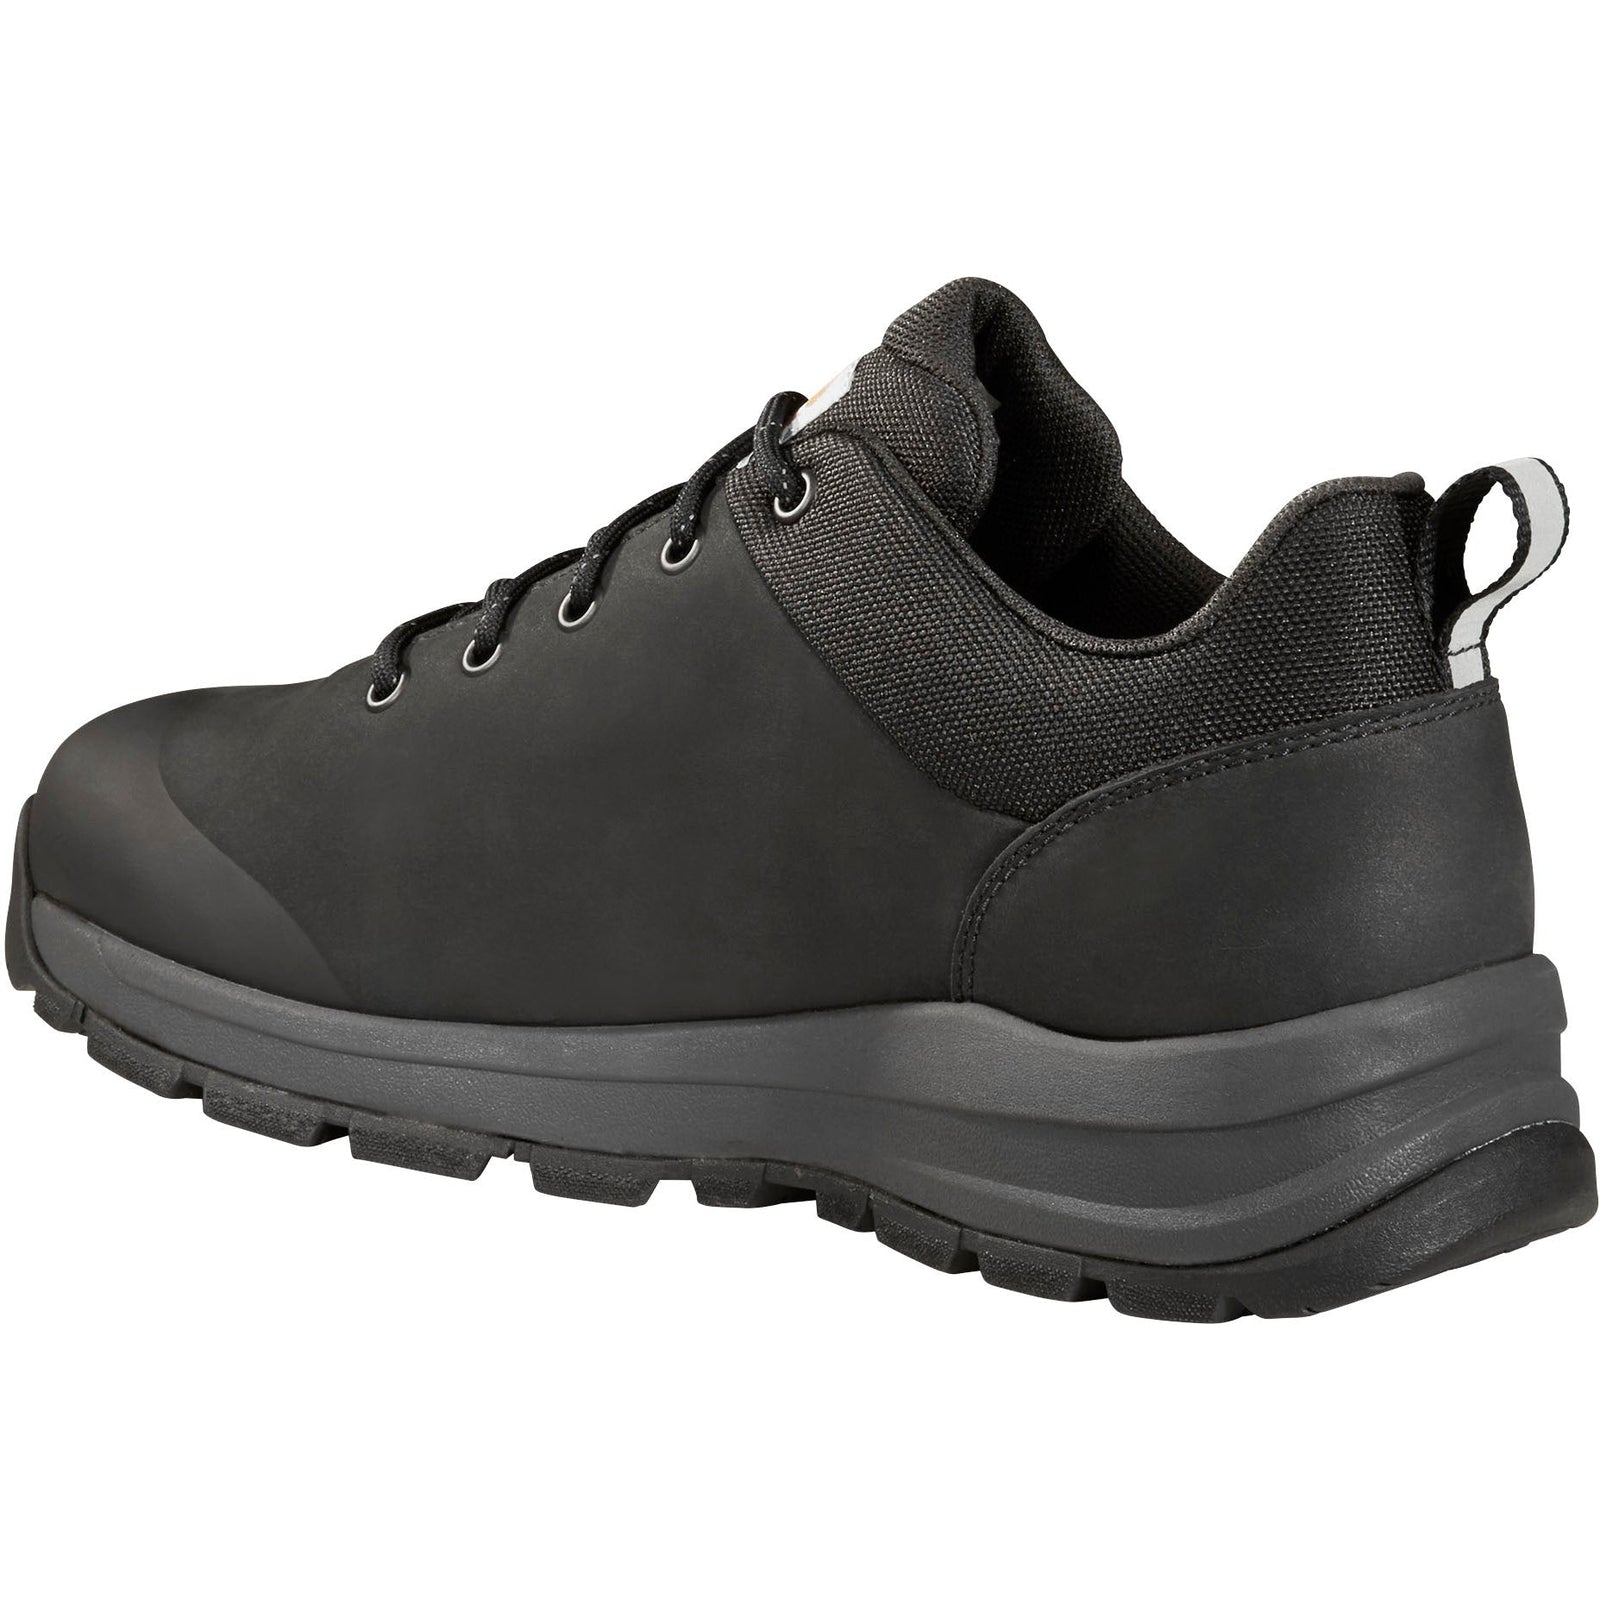 Carhartt Men's Waterproof Outdoor Low Alloy Toe Hiker -Black- FH3521-M